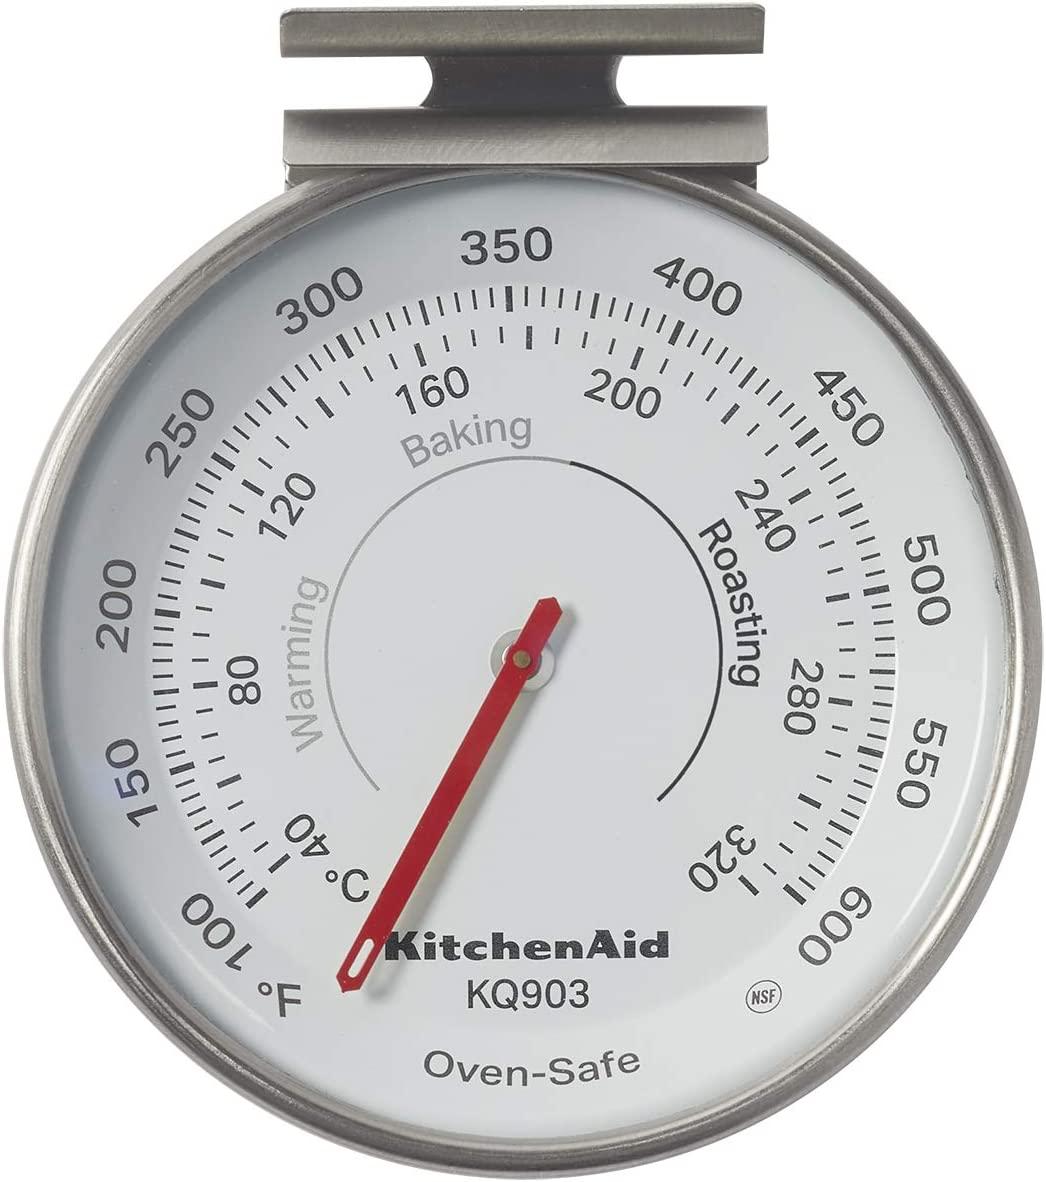 KitchenAid KQ904 Digital Instant Read Kitchen and Food Thermometer